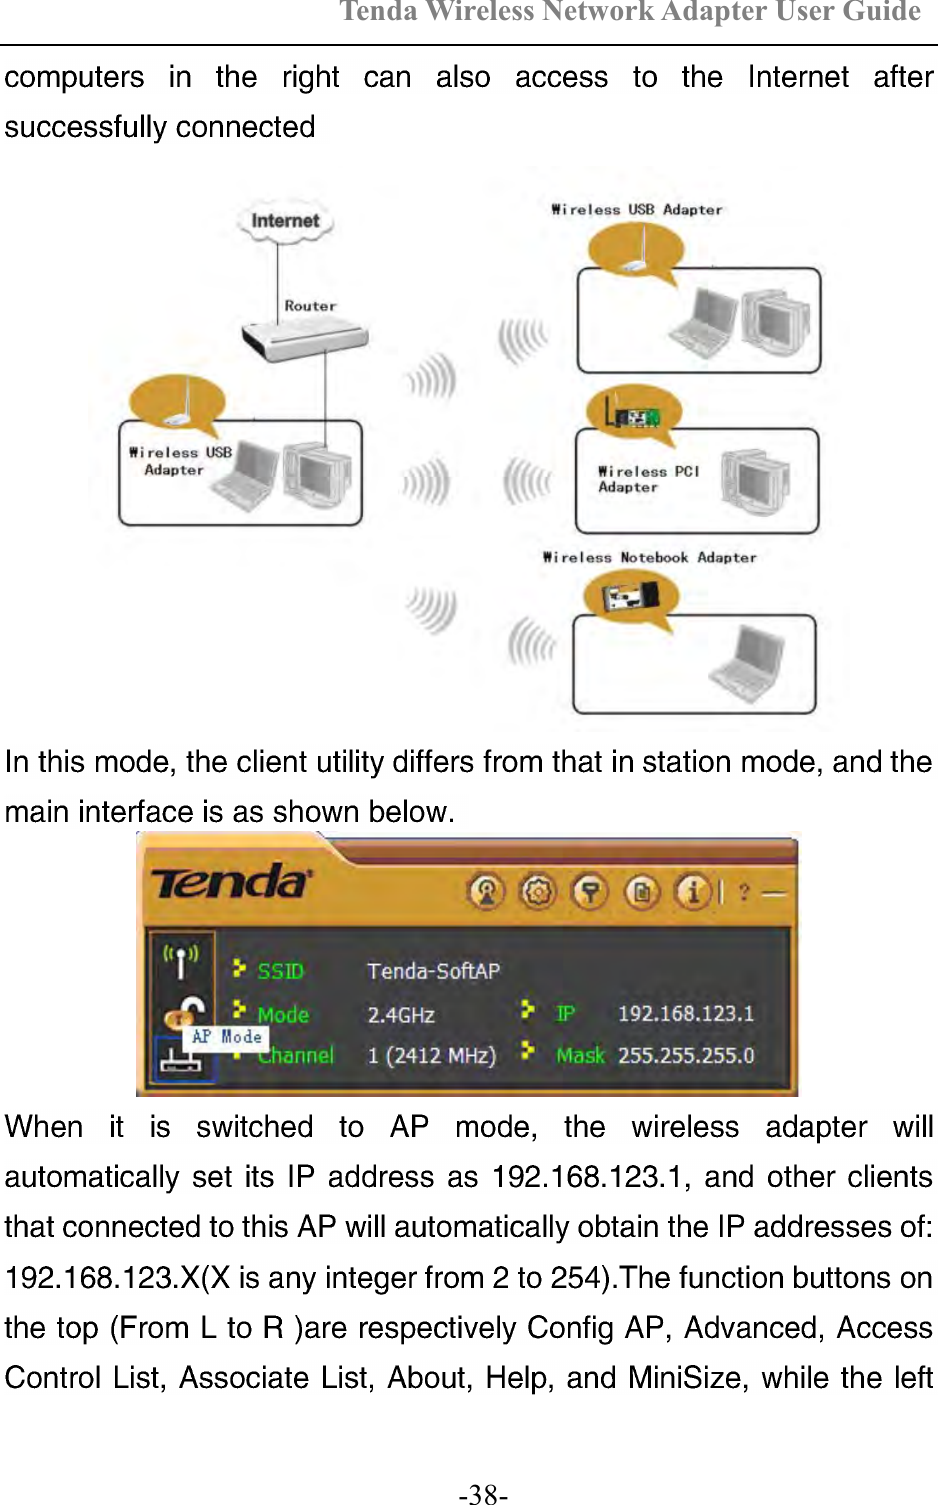 Tenda Wireless Network Adapter User Guide  -38- 